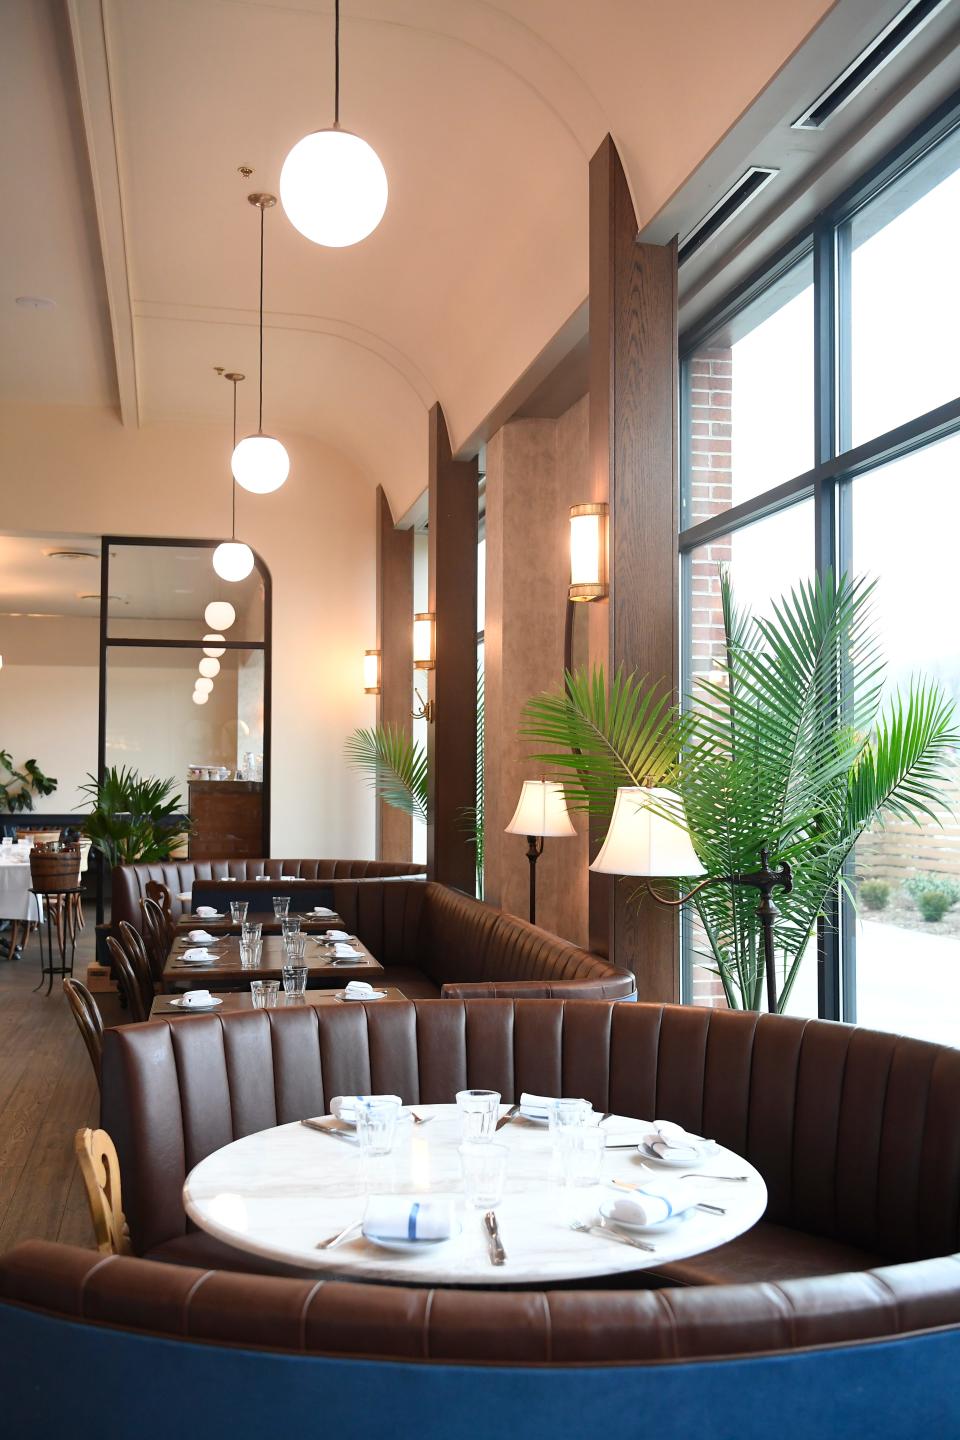 The dining room at Brasserie Memere in Closter on Thursday, Feb. 13, 2020.